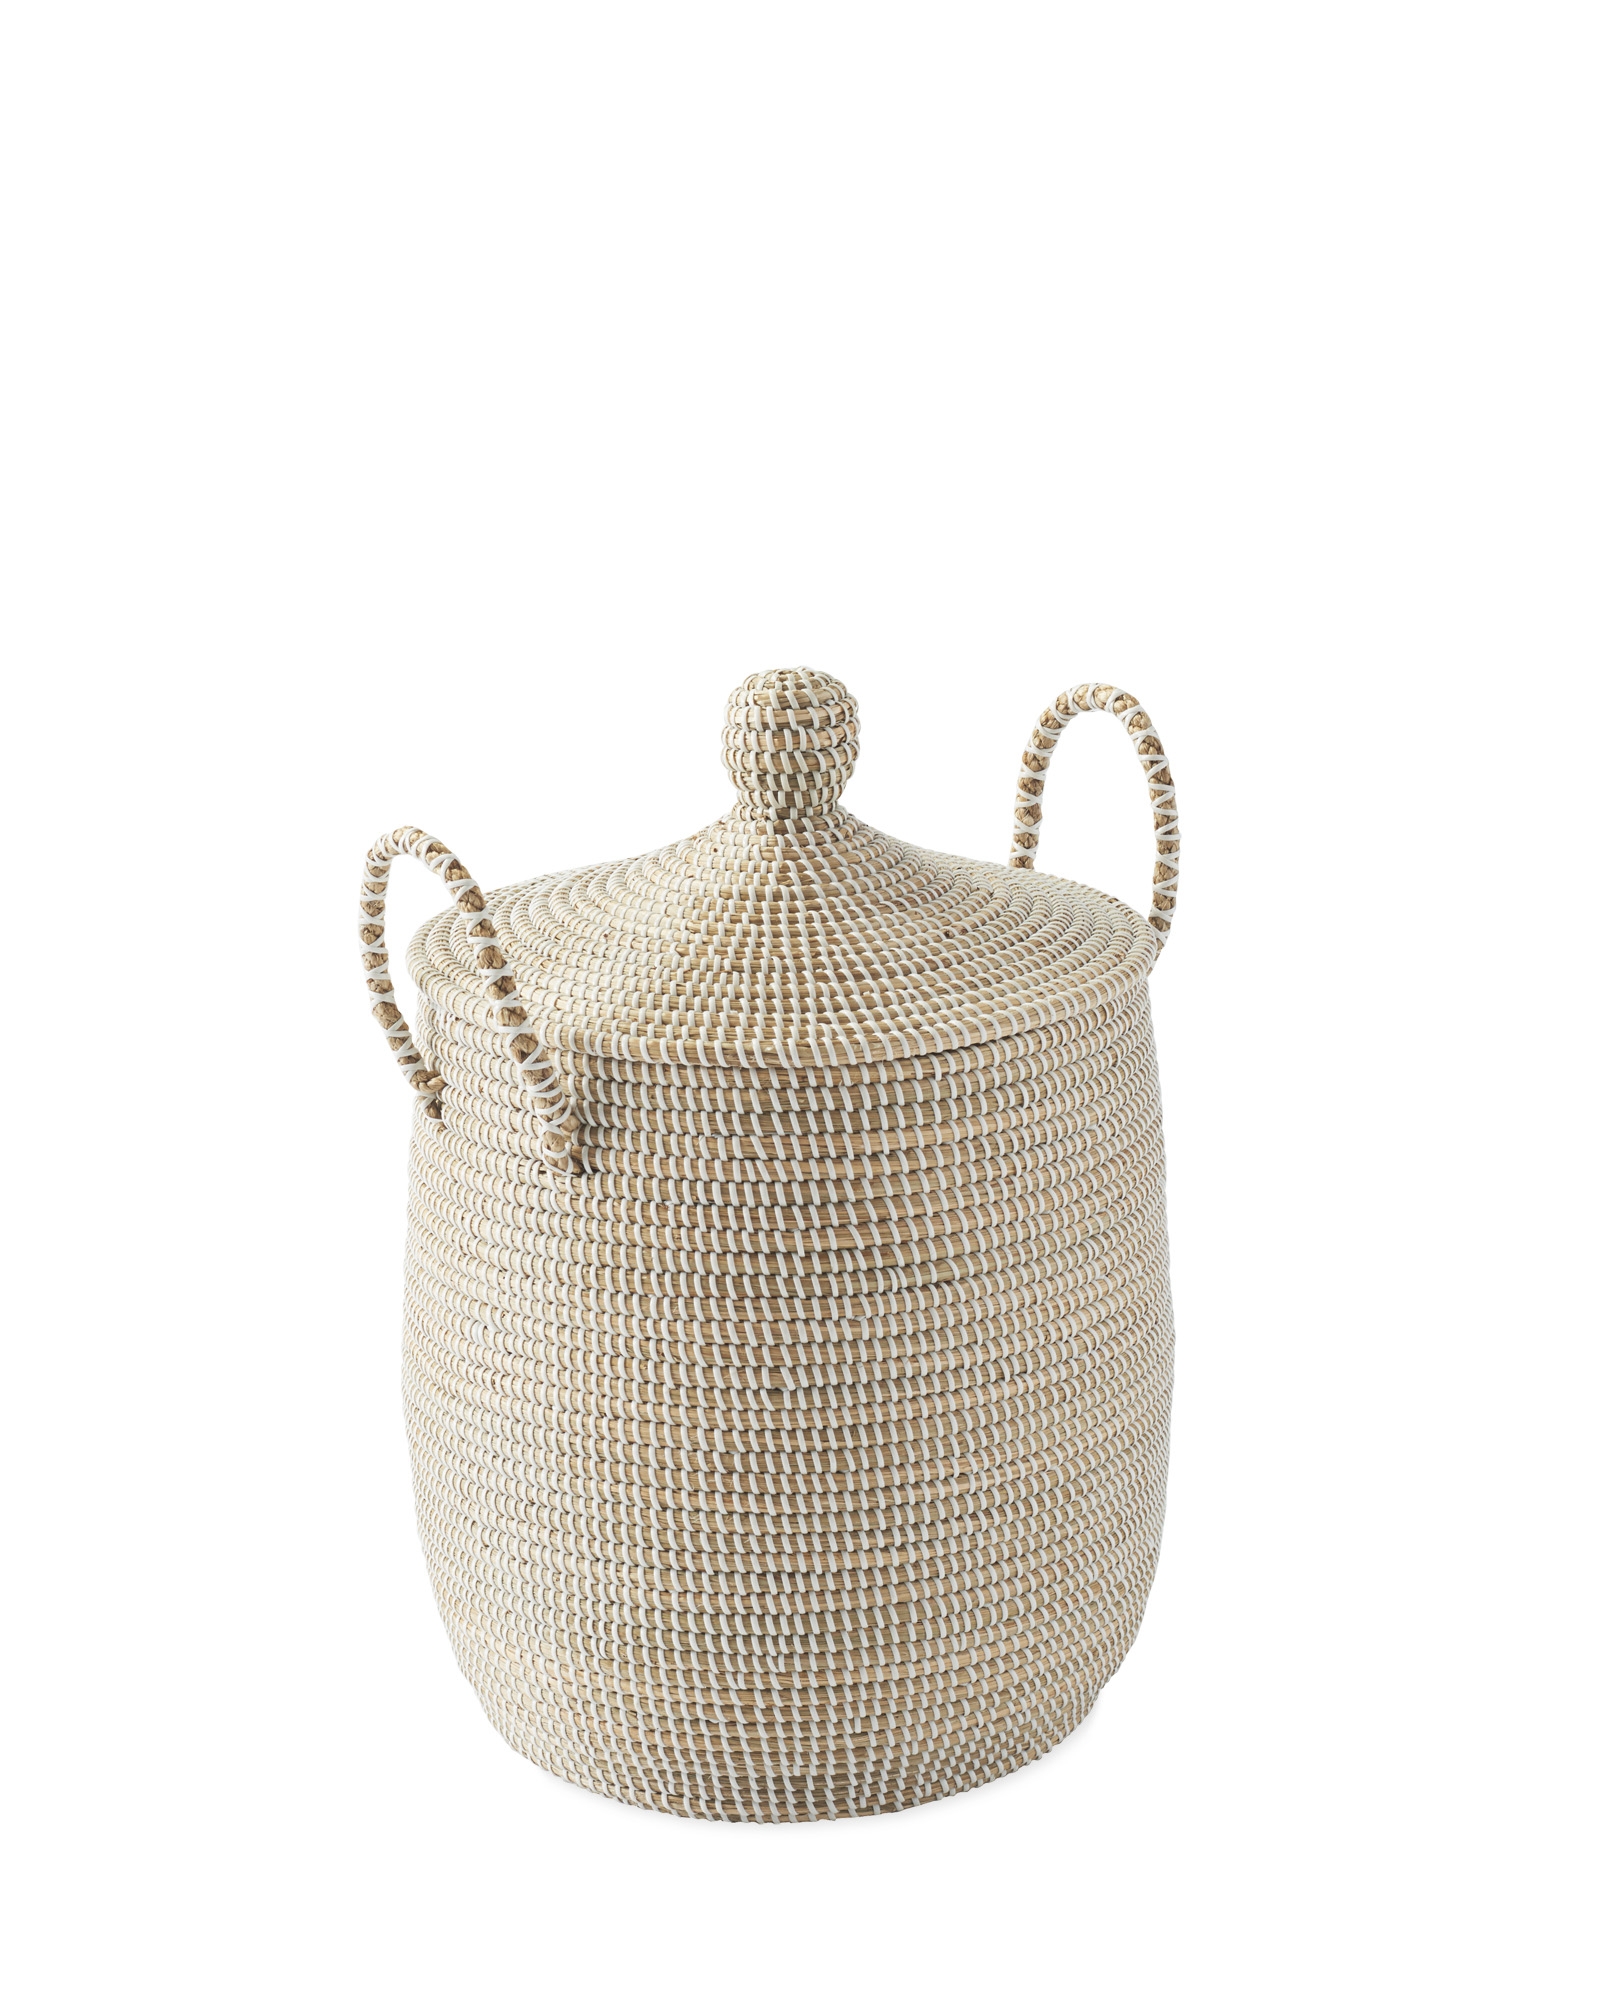 Solid La Jolla Small Basket - Natural/White - Image 0